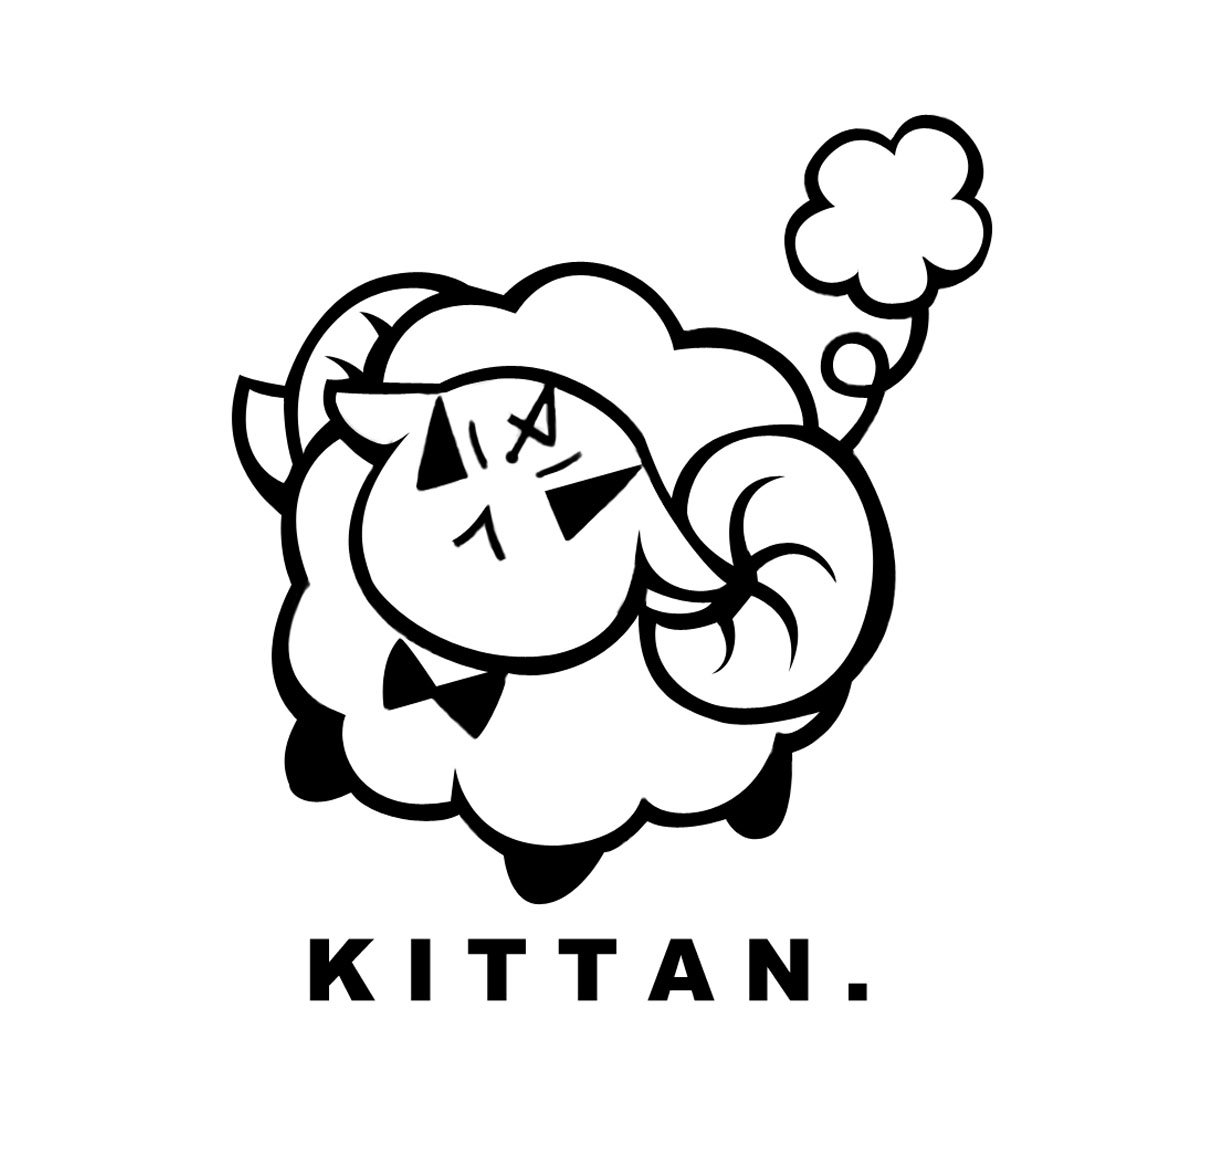 kittansan1 Profile Picture